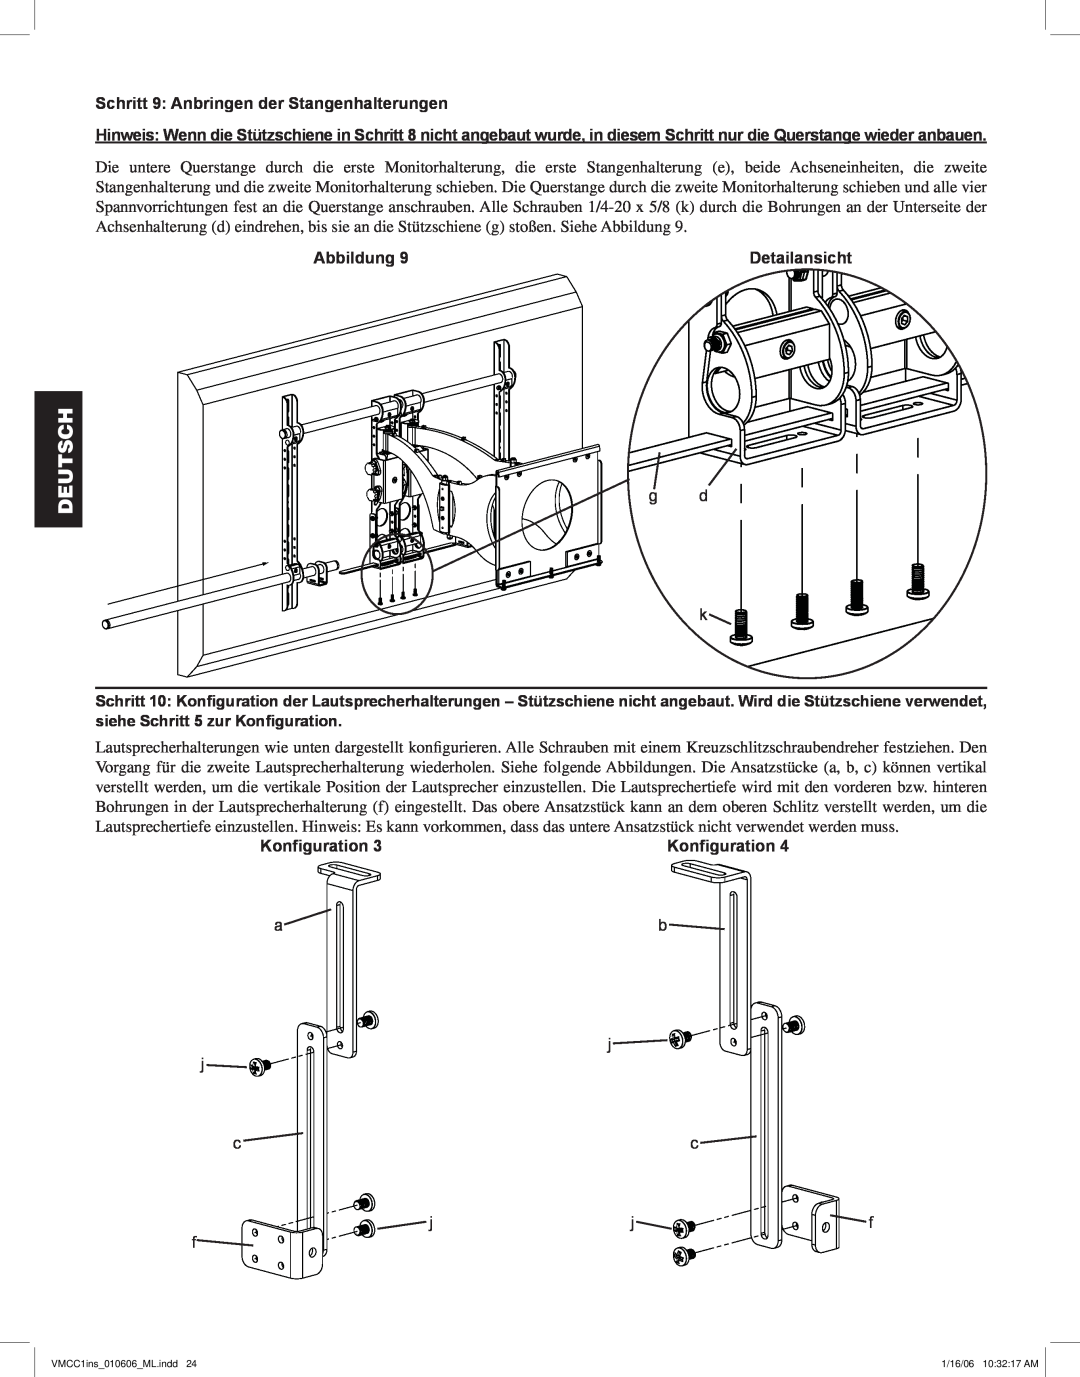 Sanus Systems VMCC1 manual Schritt 9 Anbringen der Stangenhalterungen, Deutsch, Abbildung, Detailansicht, Konfiguration 